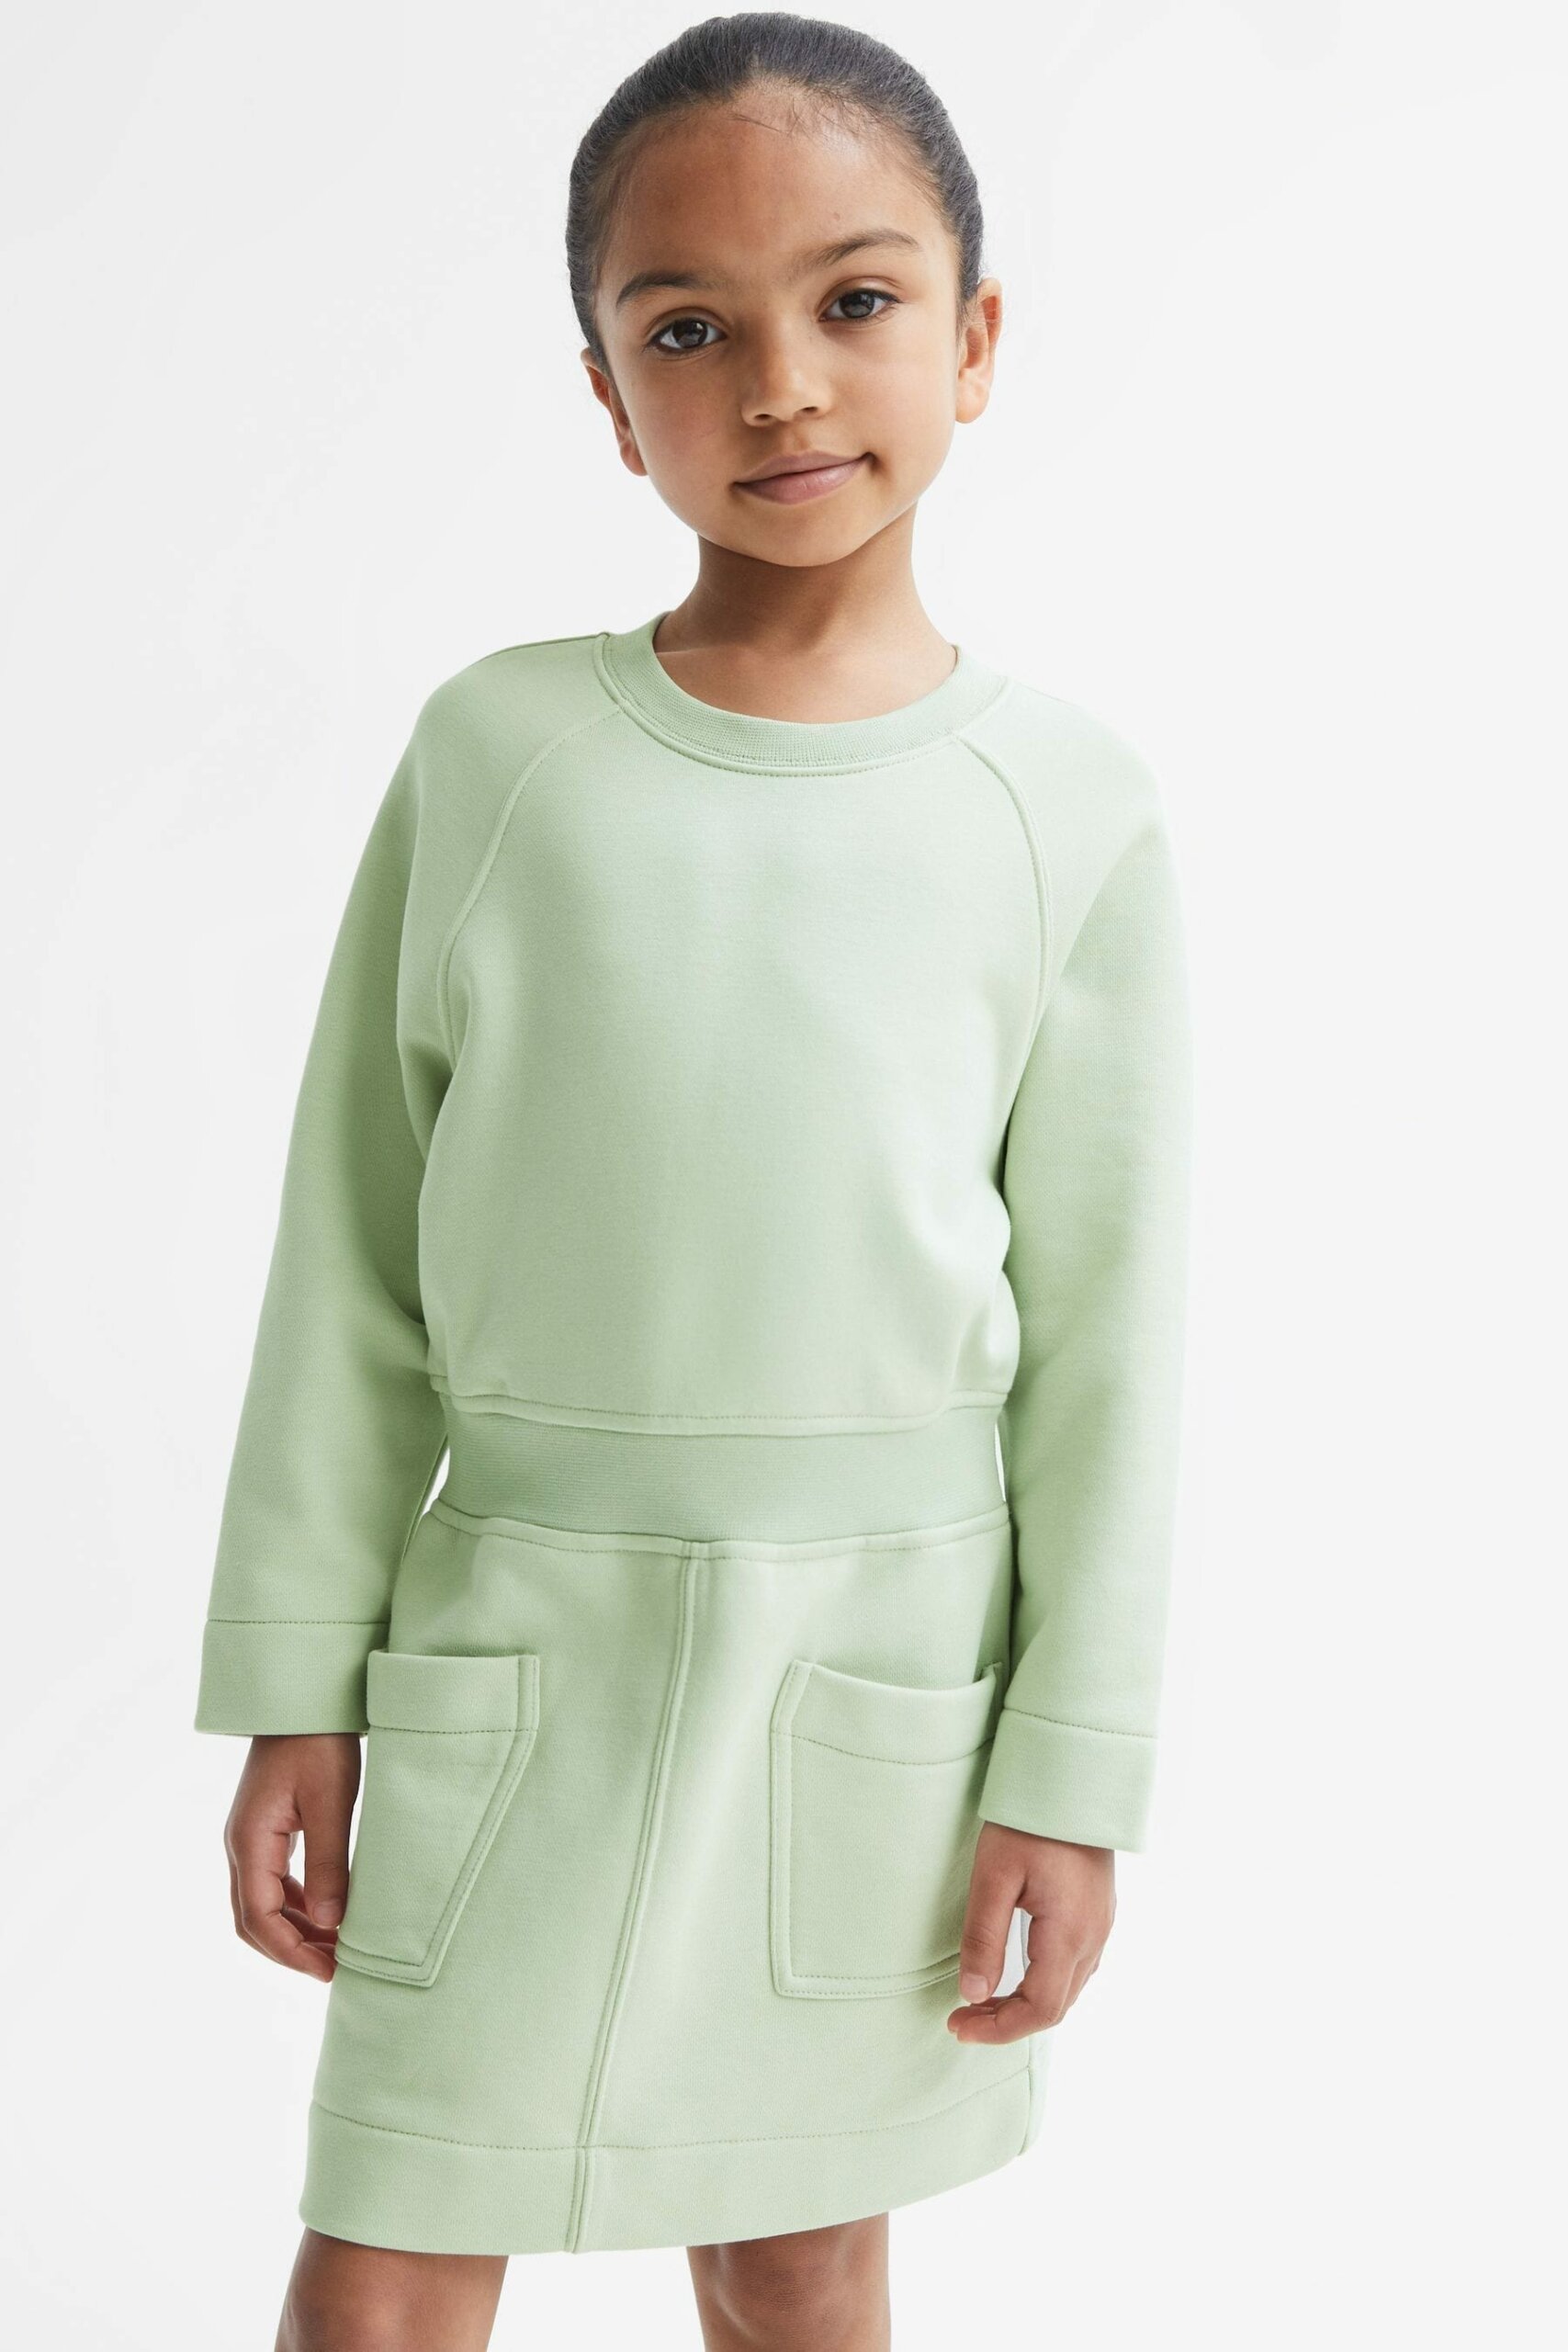 Janine Senior Sweatshirt Dress - Green Cotton Plain, Size: 11